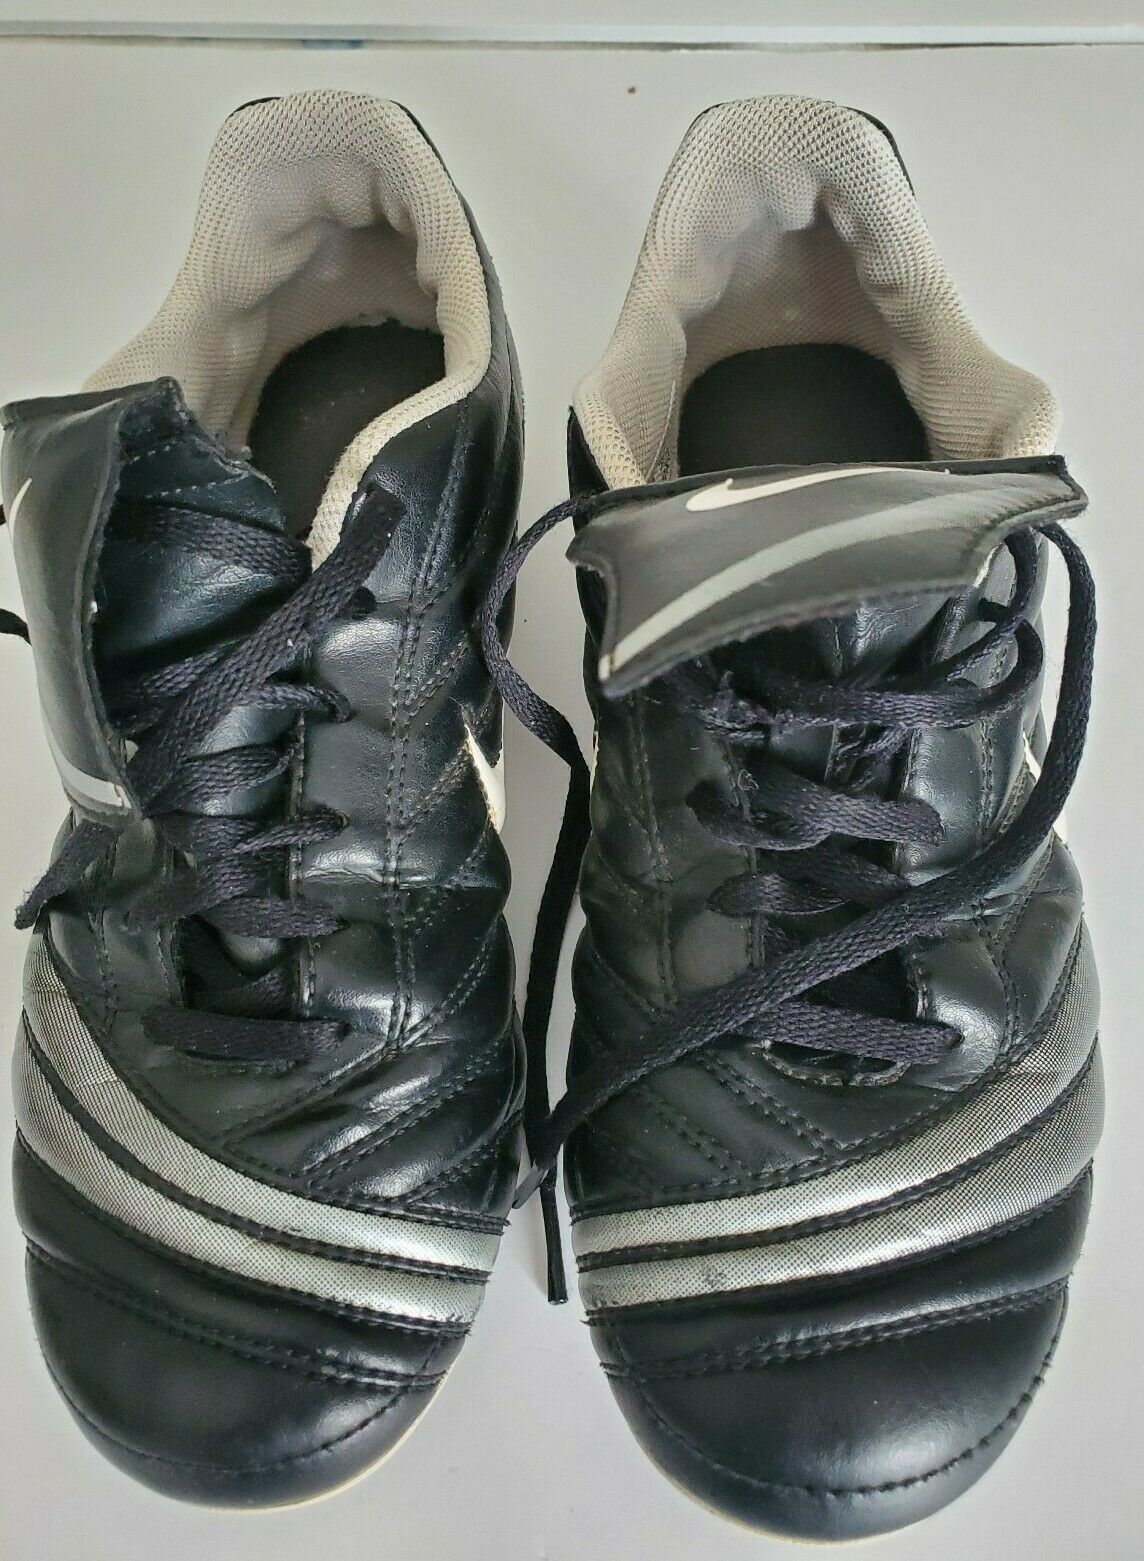 Boys Soccer shoes Cleats Size 5.5 Nike Black, zapatos futbol niños Size 5.5